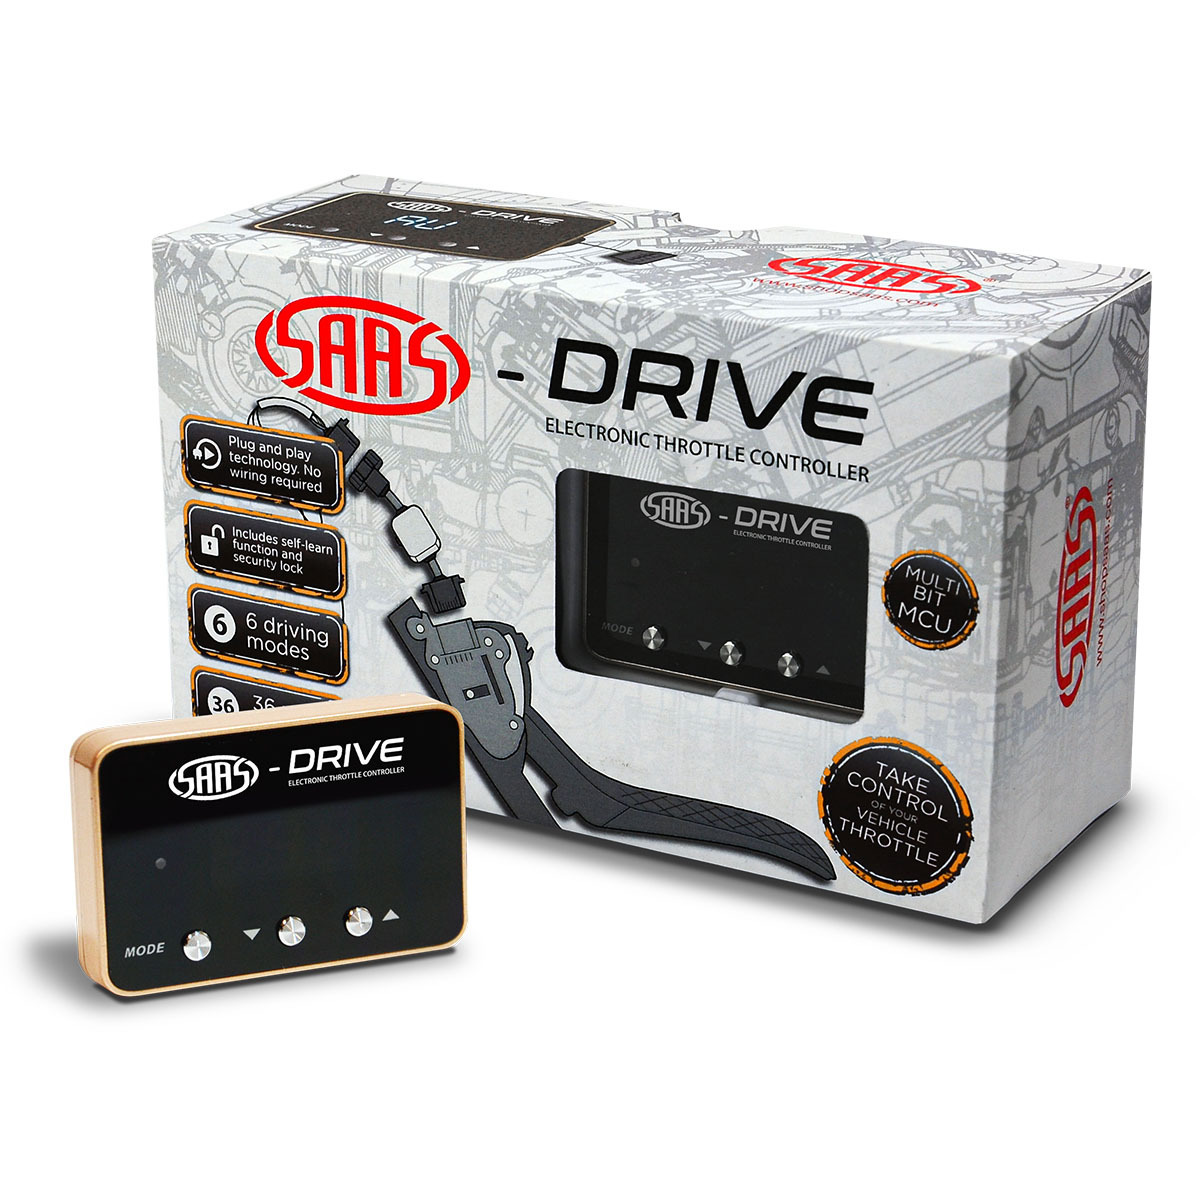 SAAS-Drive Infiniti Q40/50/60 V36 2014 - 2015 Throttle Controller